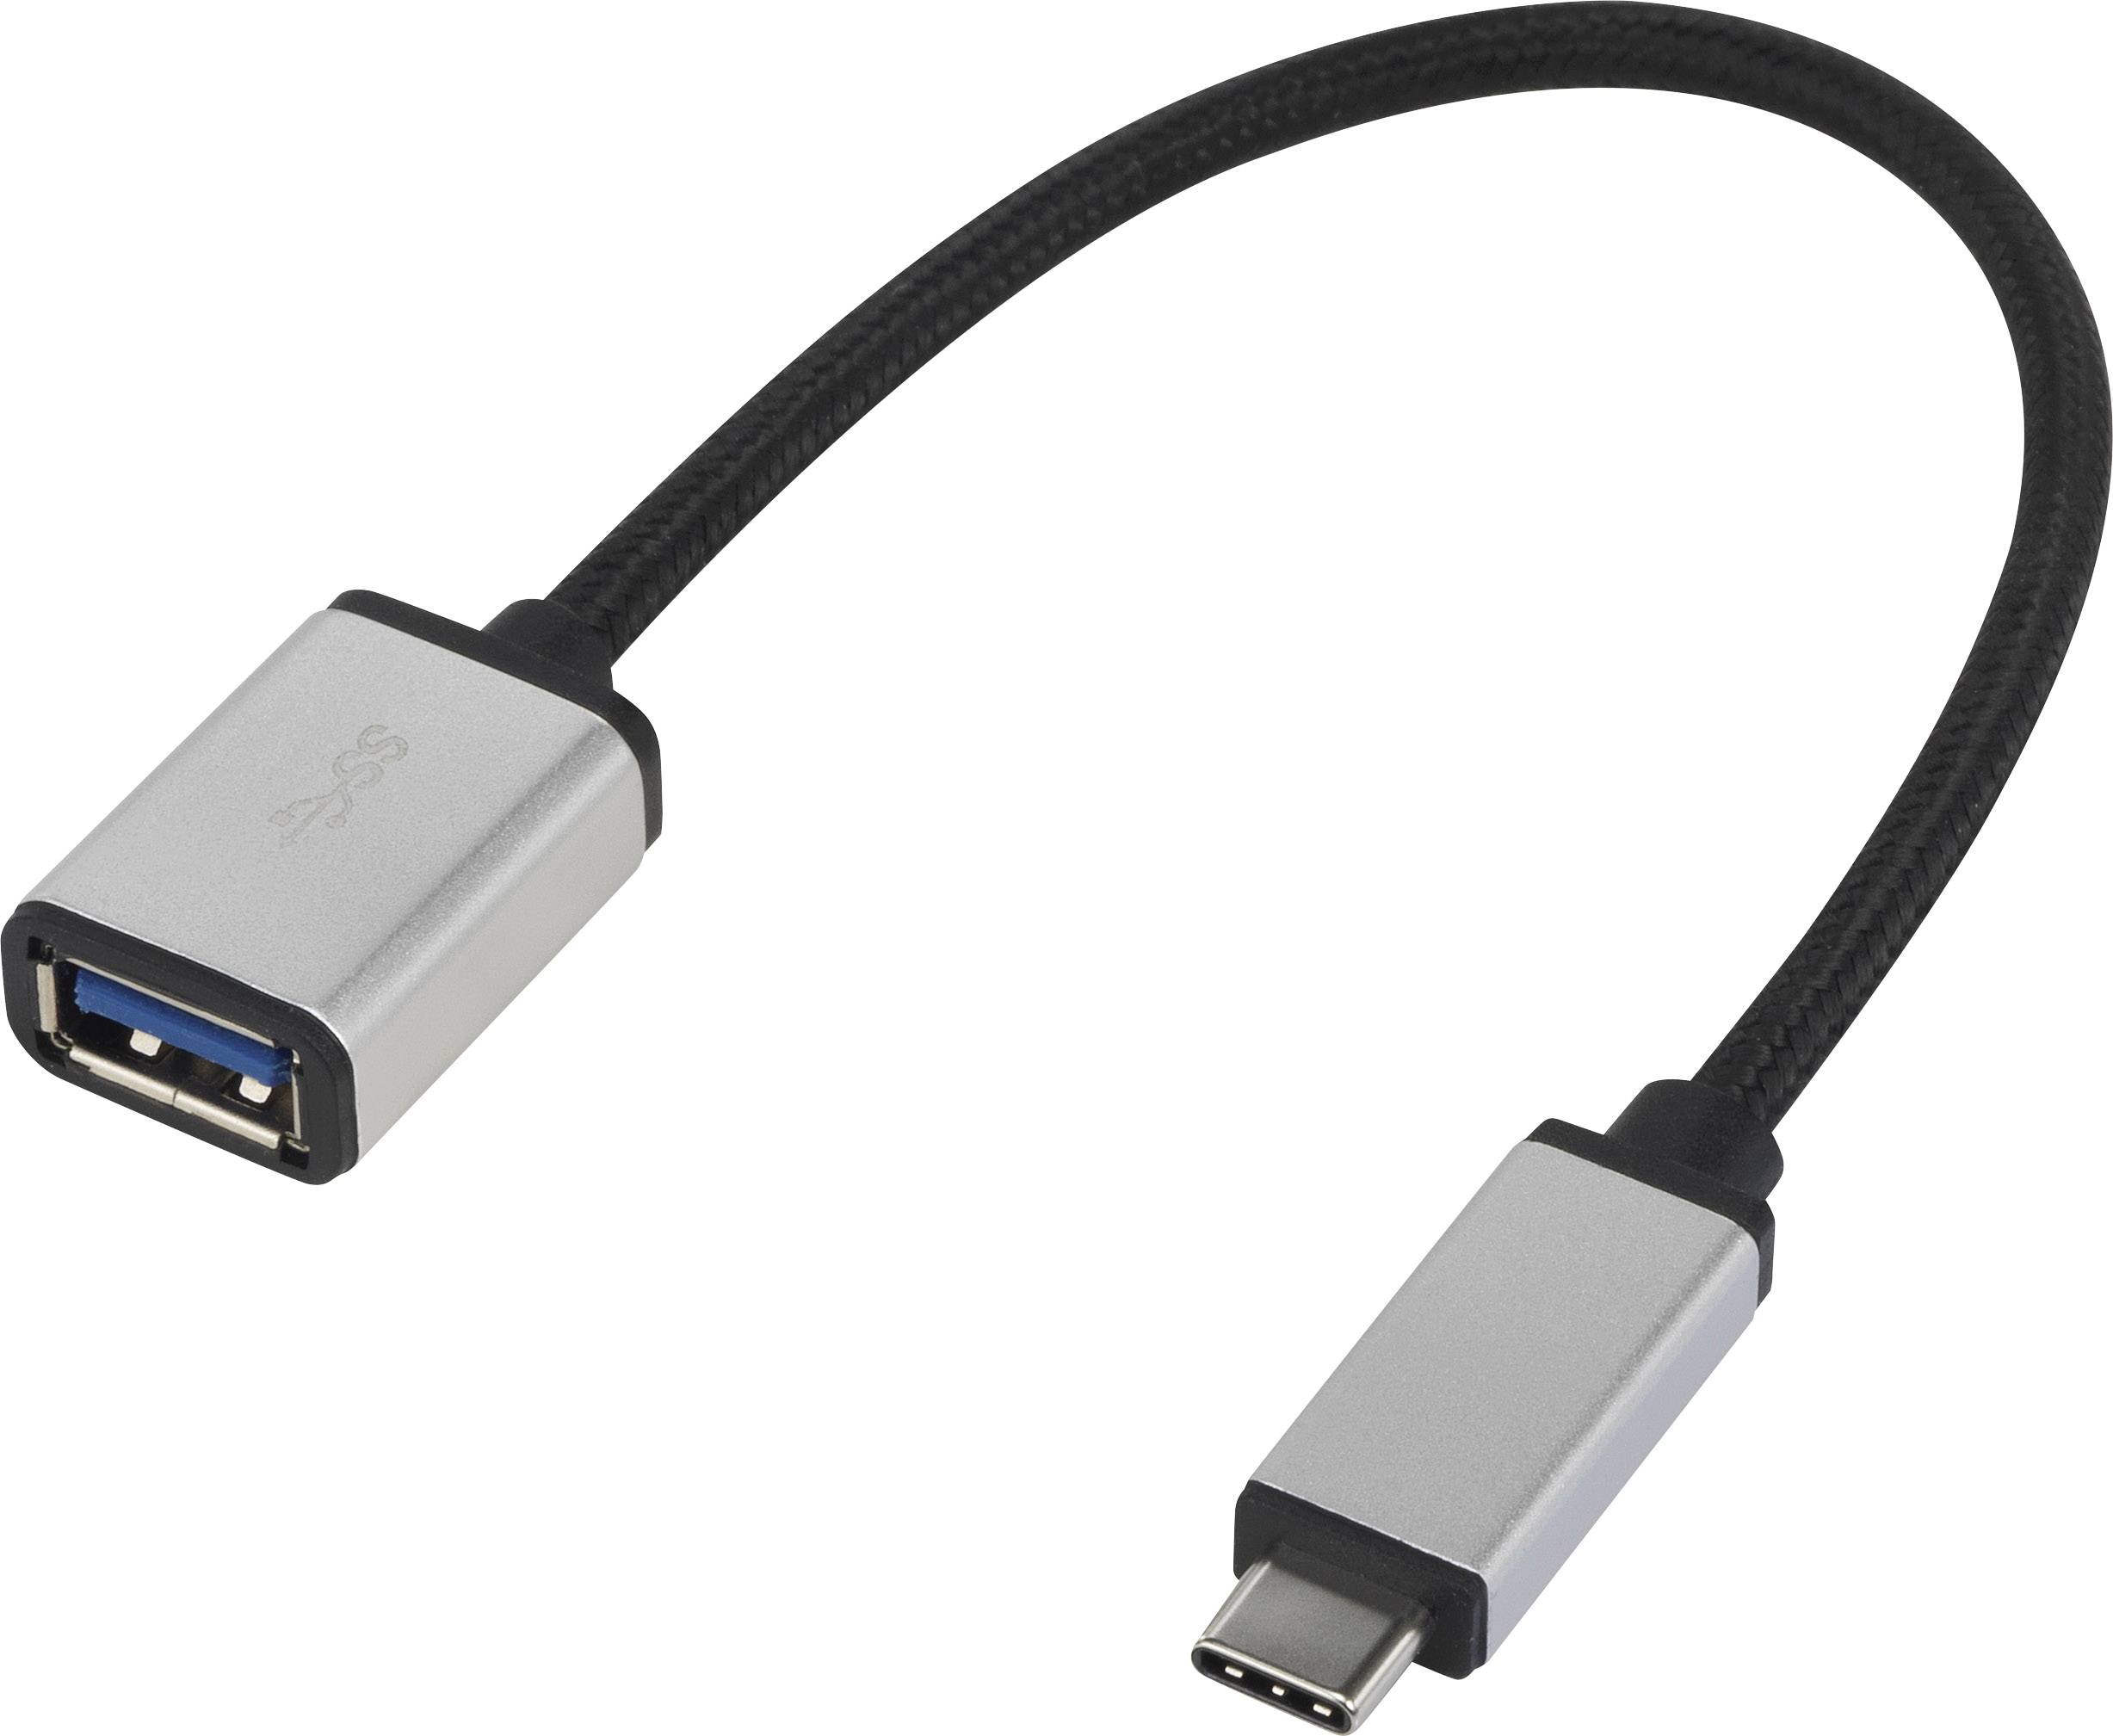 Usb c gen1. USB 3.2 gen1 x1. USB C 3.2 gen1. USB 3.1 gen2, 1 m USB кабель 3.2 Gen 1 (3.1 Gen 1) USB C. USB 3.1 Gen 2 переходник.